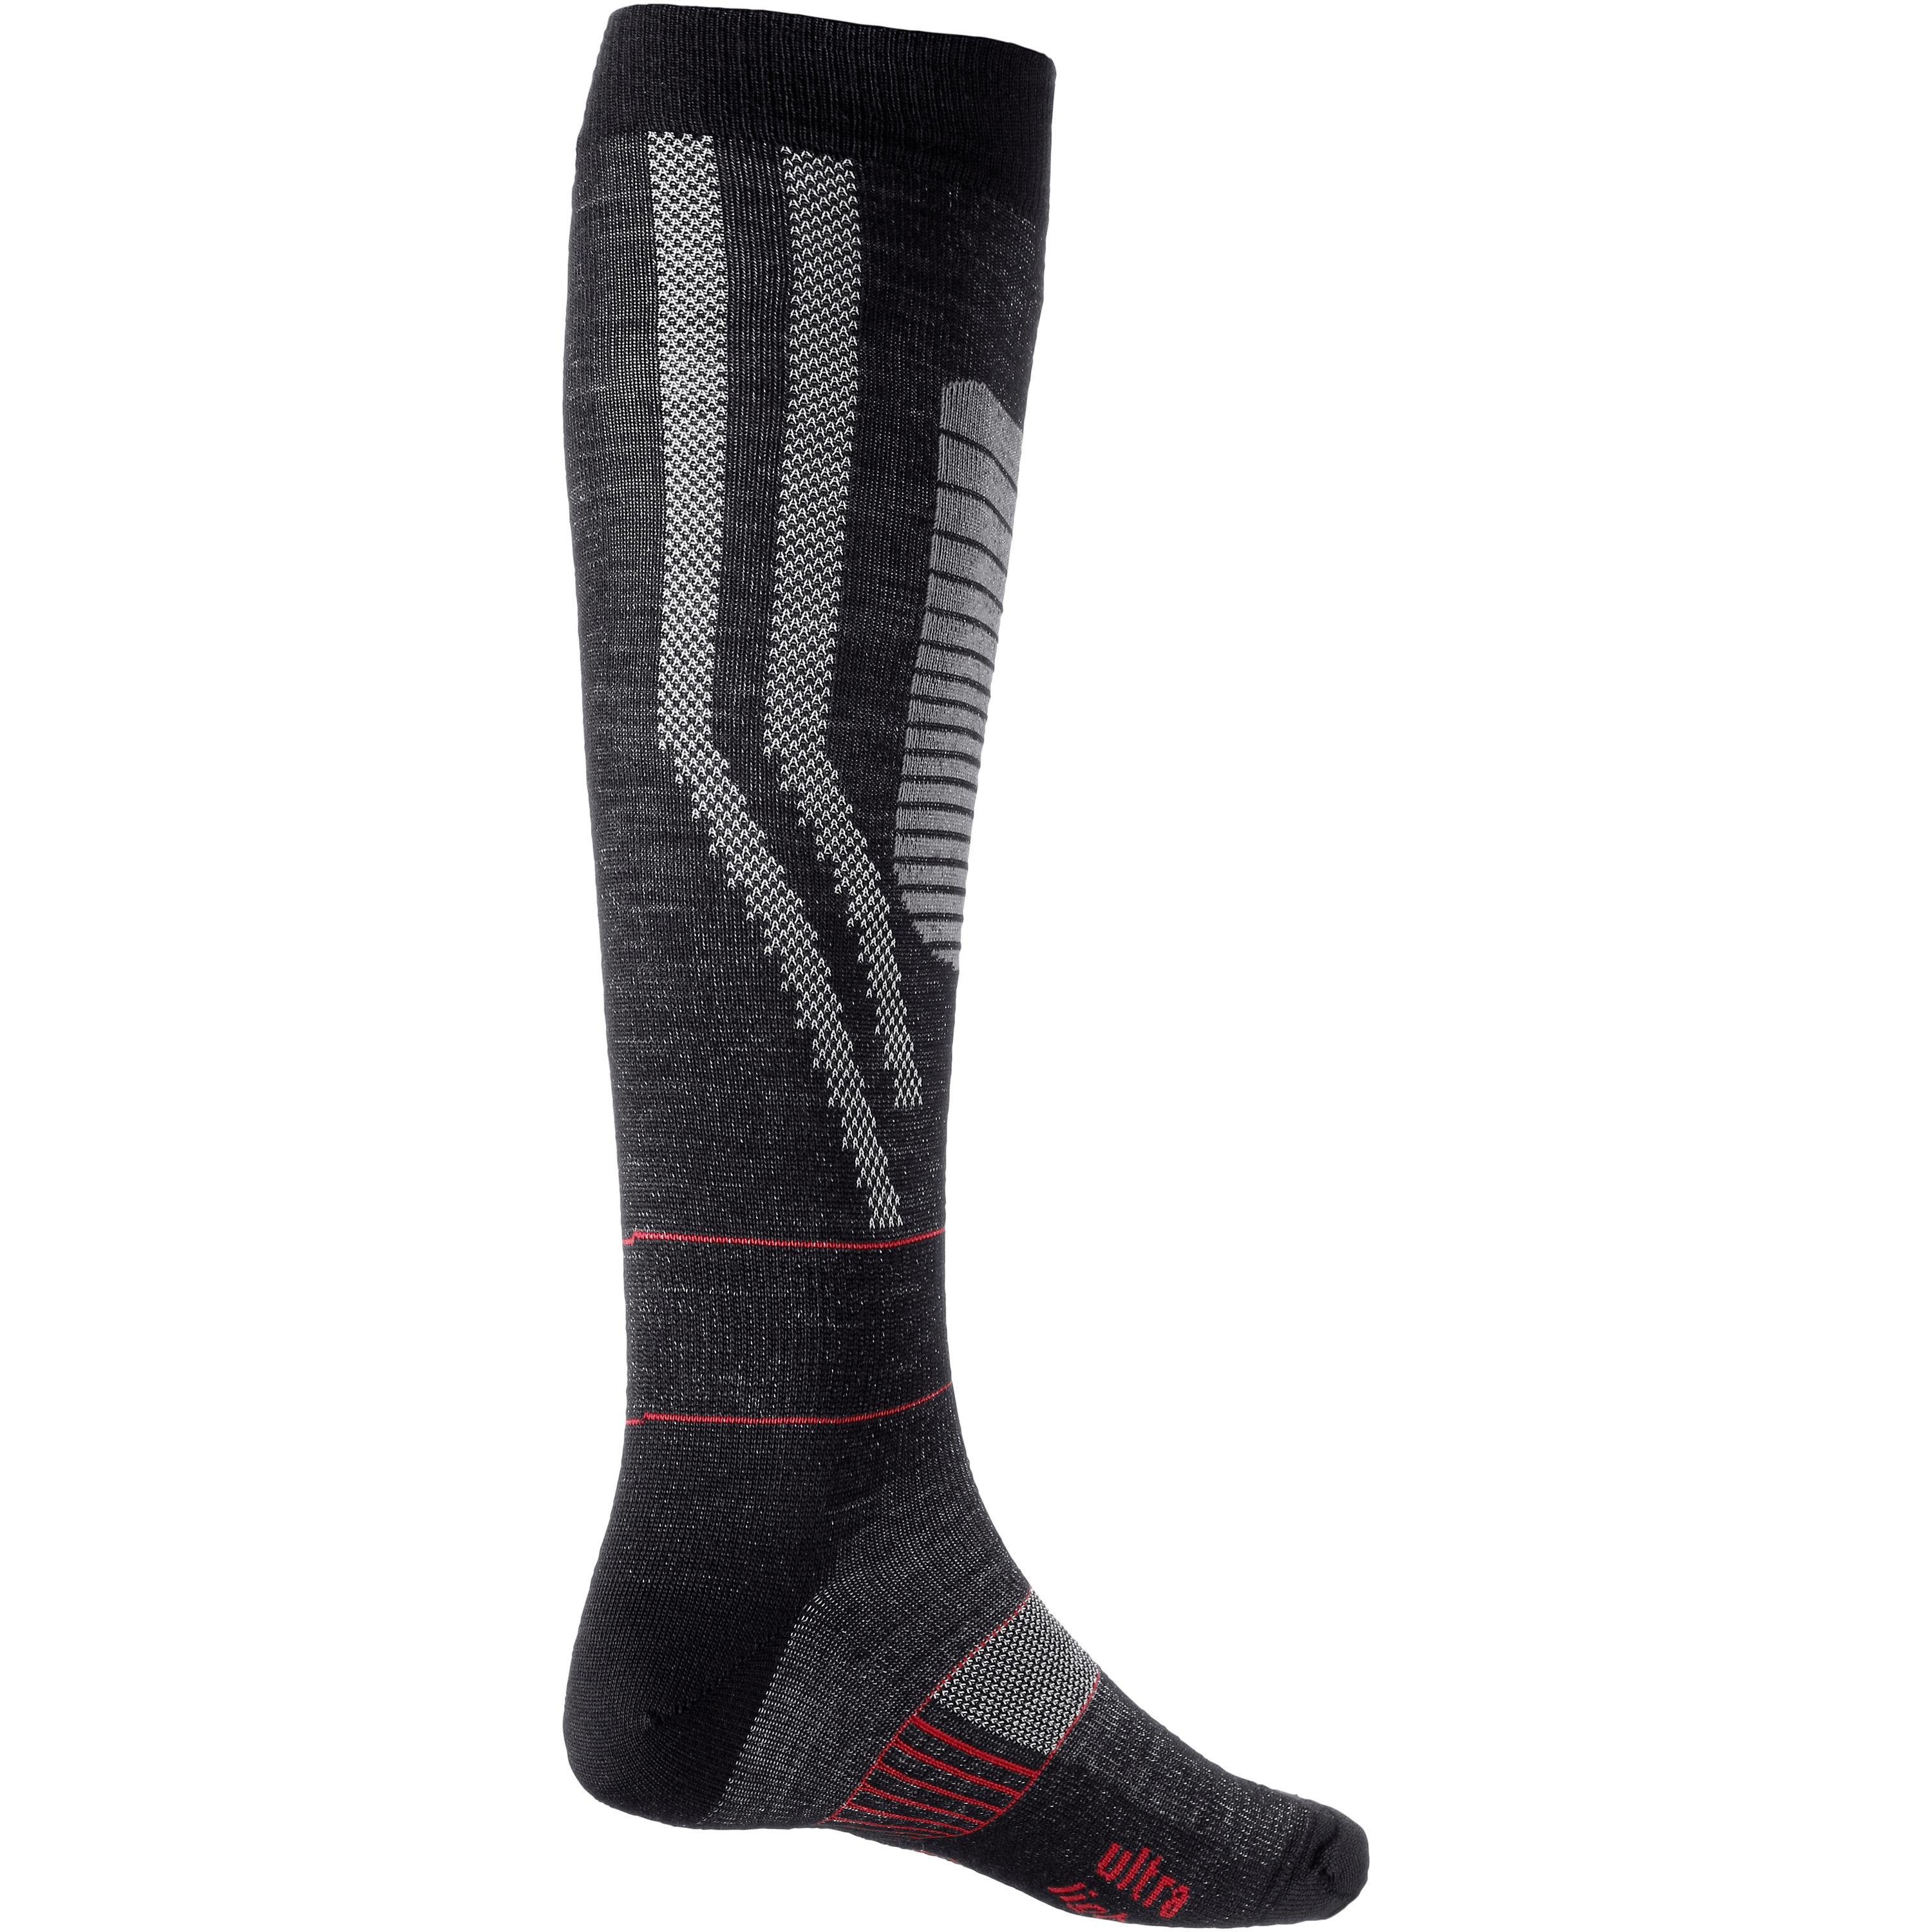 Rohner Socks Skisocken Ultra light, Elastzone online kaufen | OTTO